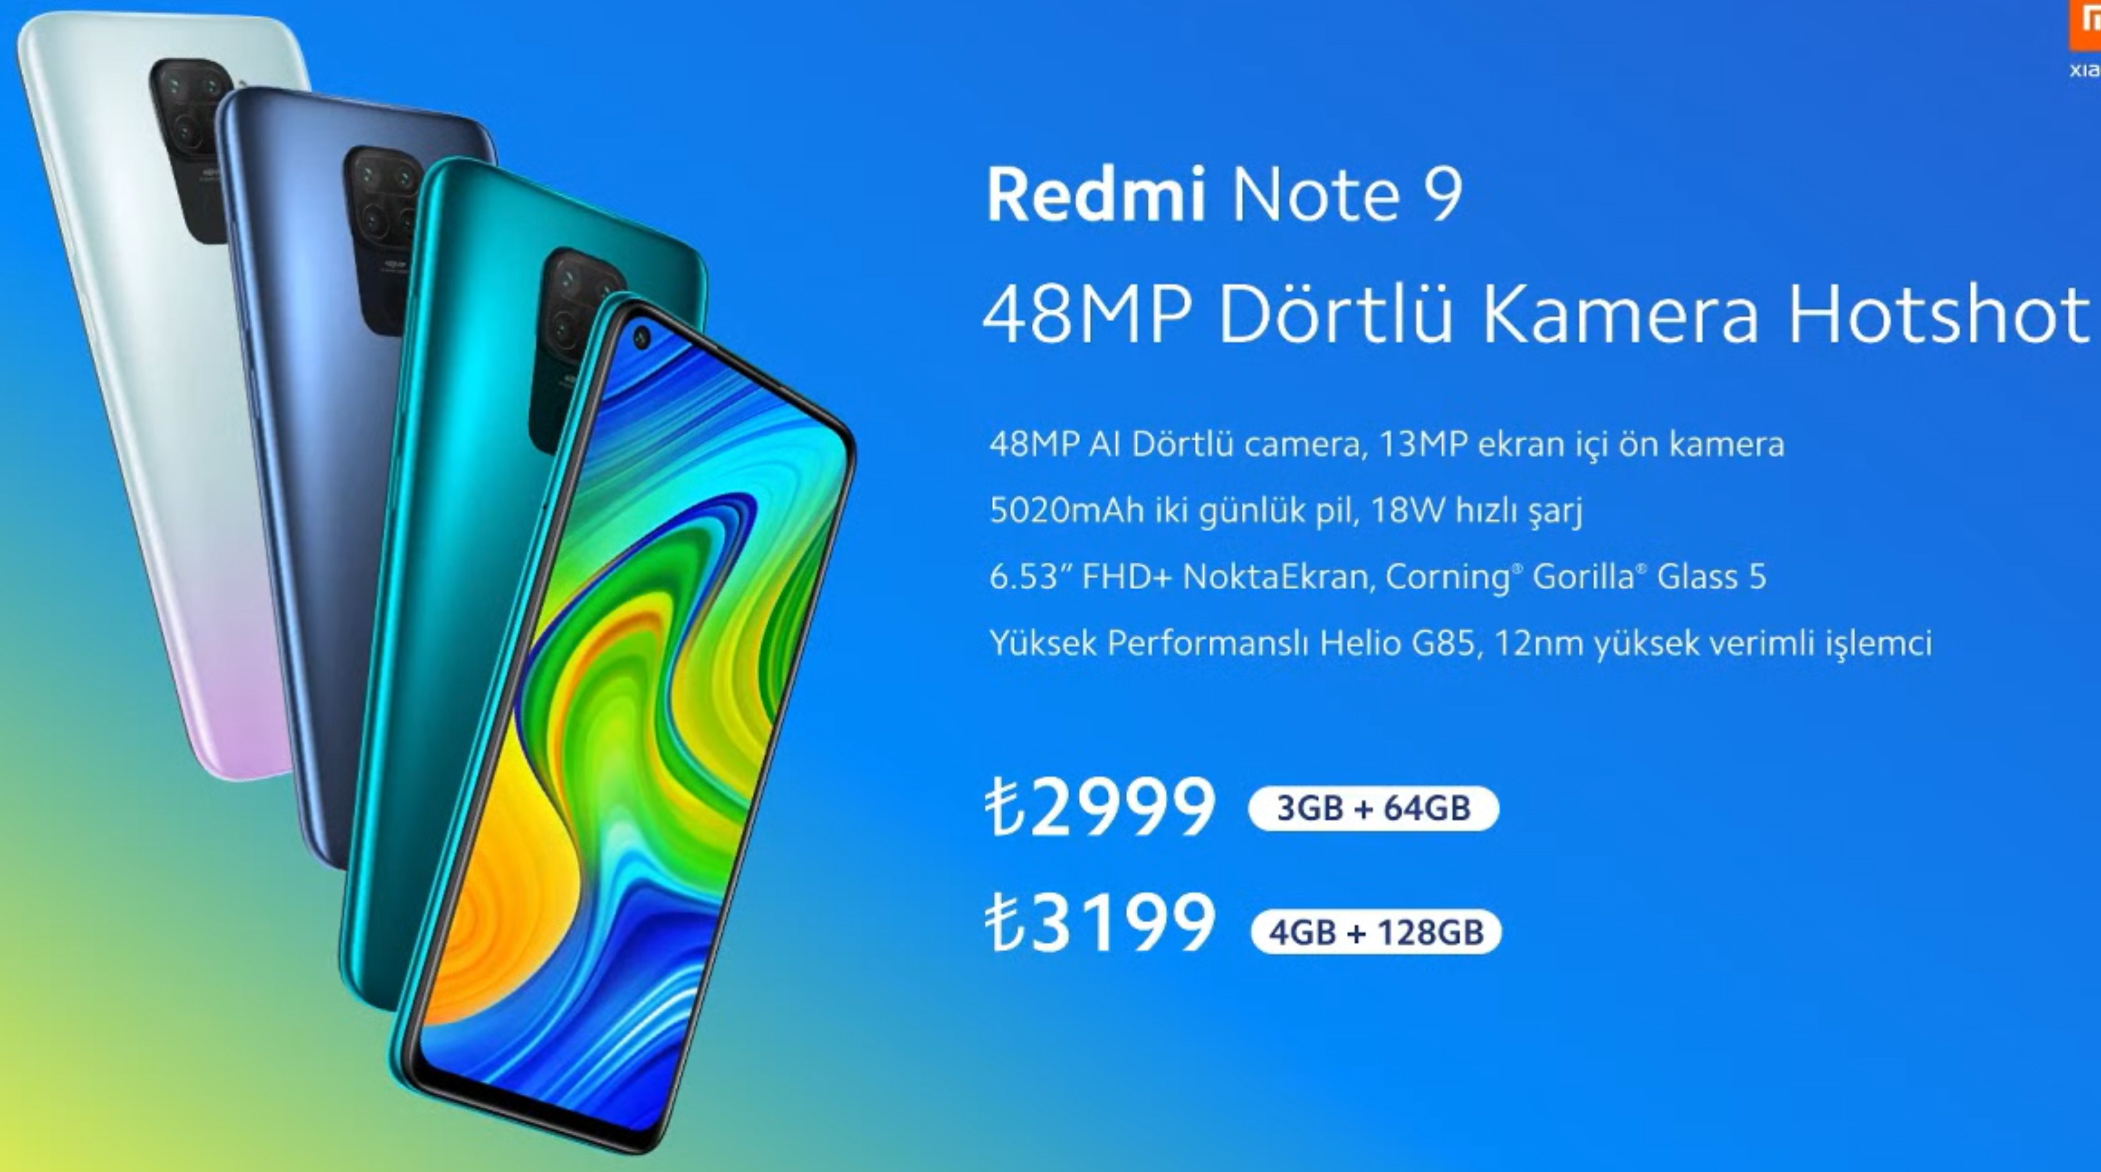 Redmi Note 9 Türkiye fiyatı - Redmi Note 9 fiyatı